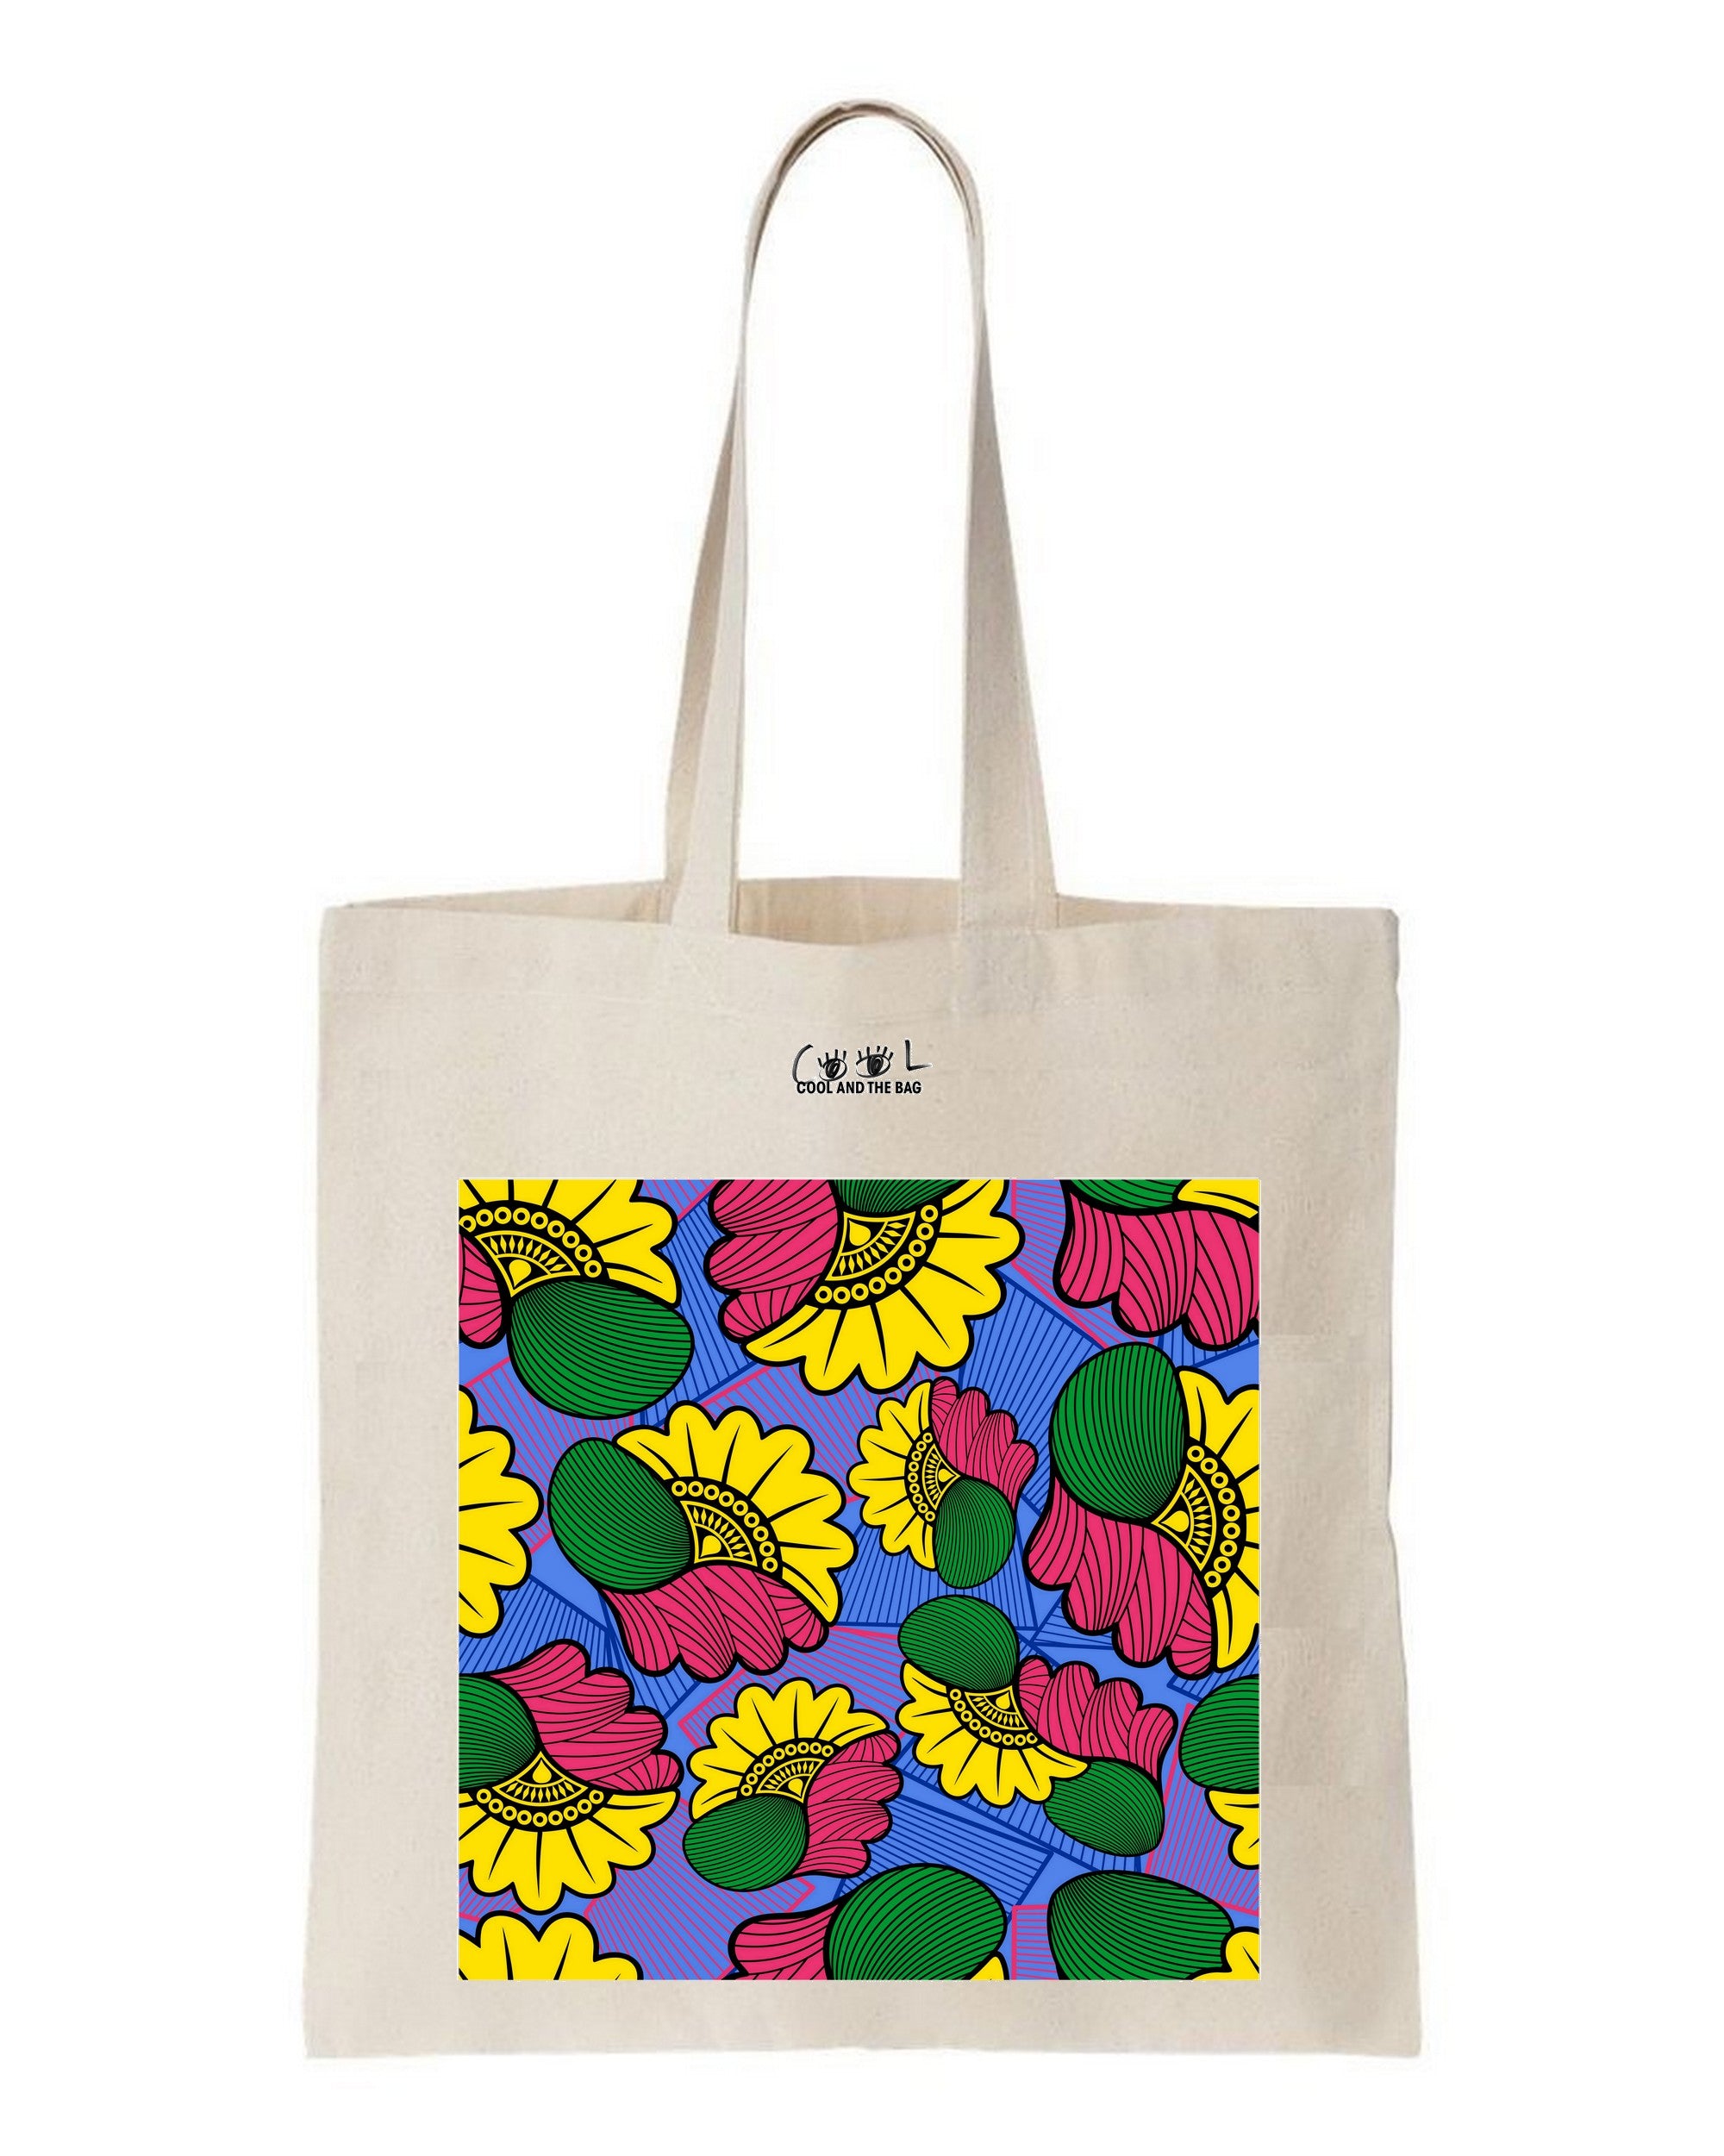 Tote bag Wax – Cool and the bag